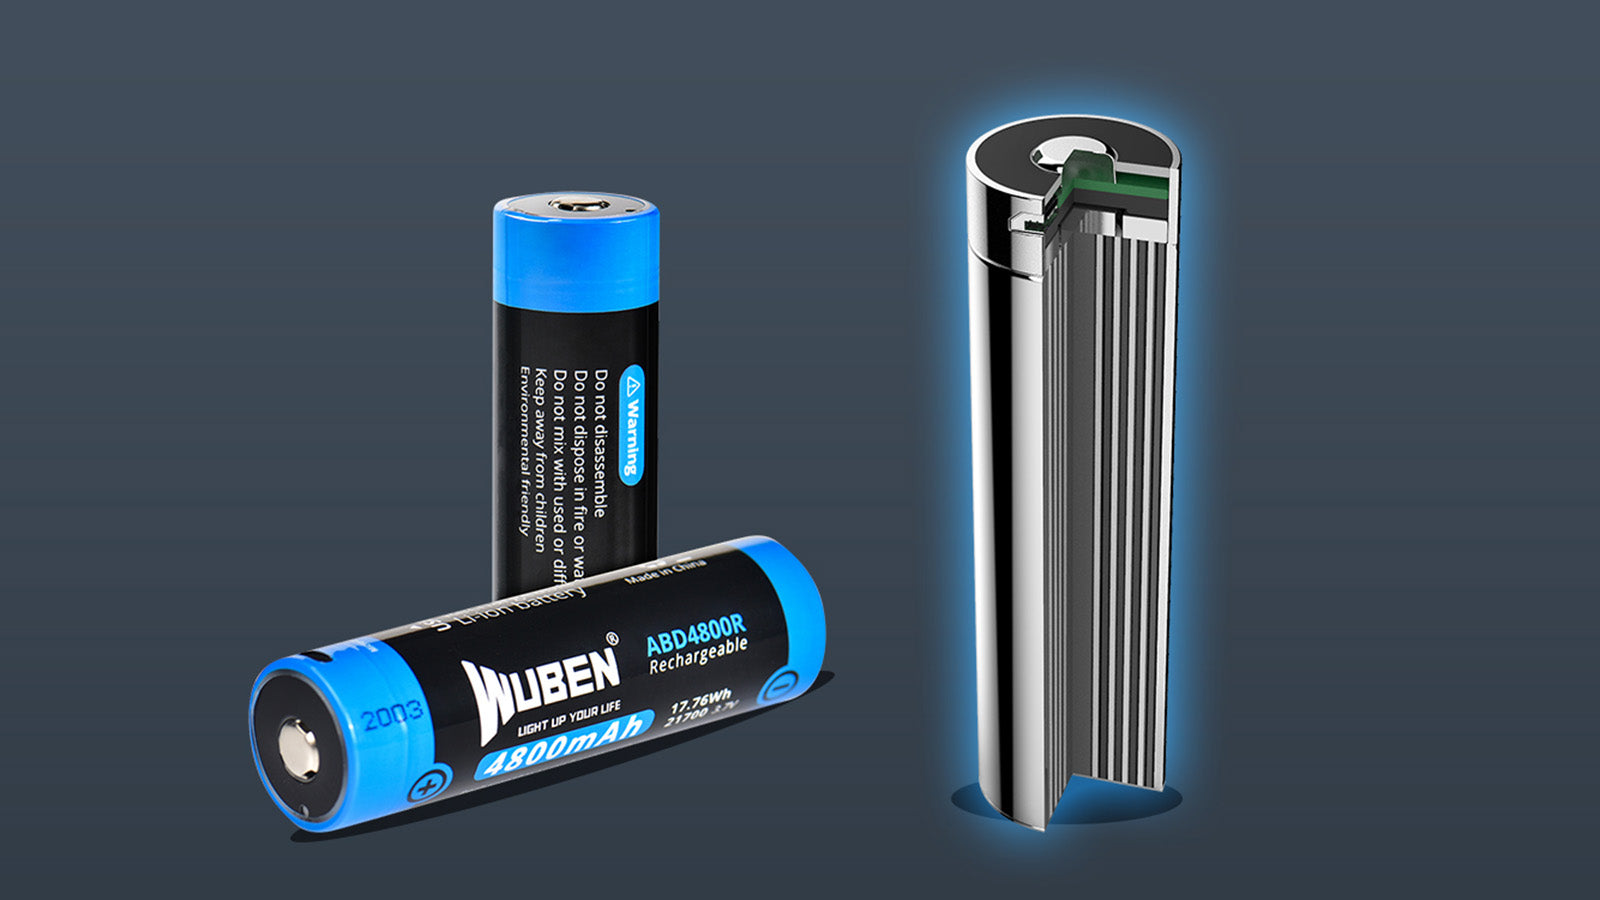 Flashlight batteries